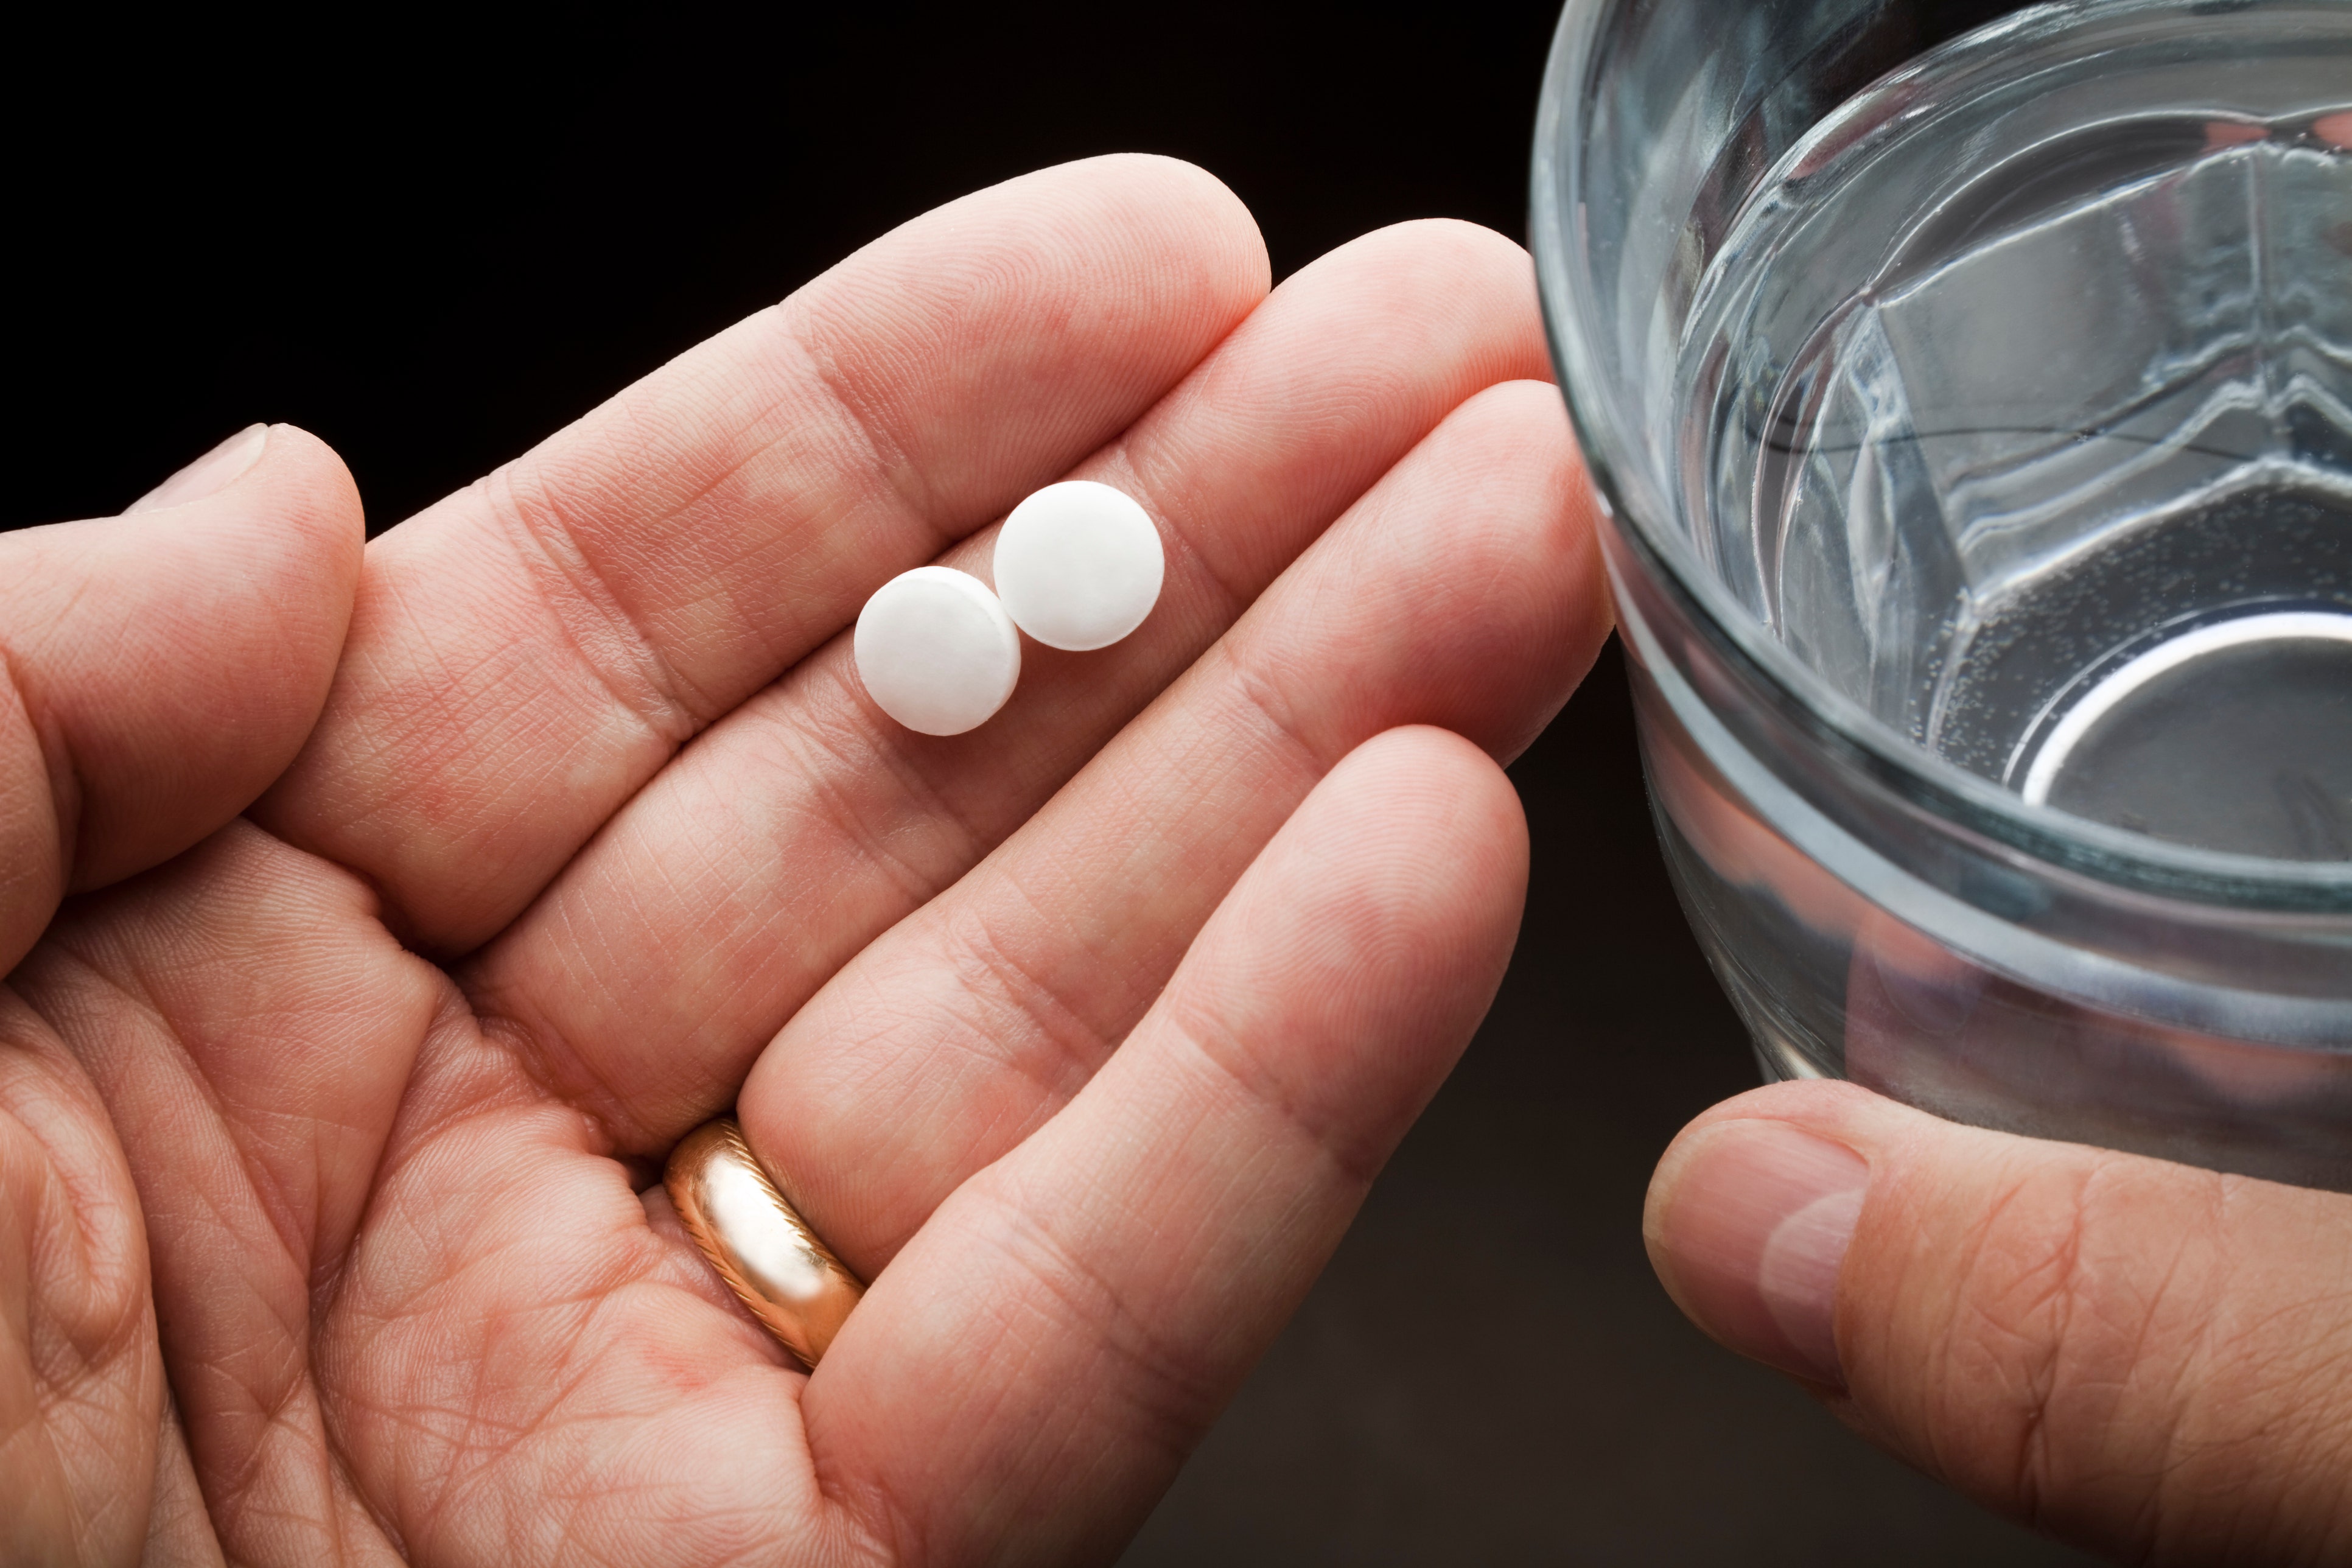 Low-dose aspirin reduces severe risk of coronavirus, study suggests